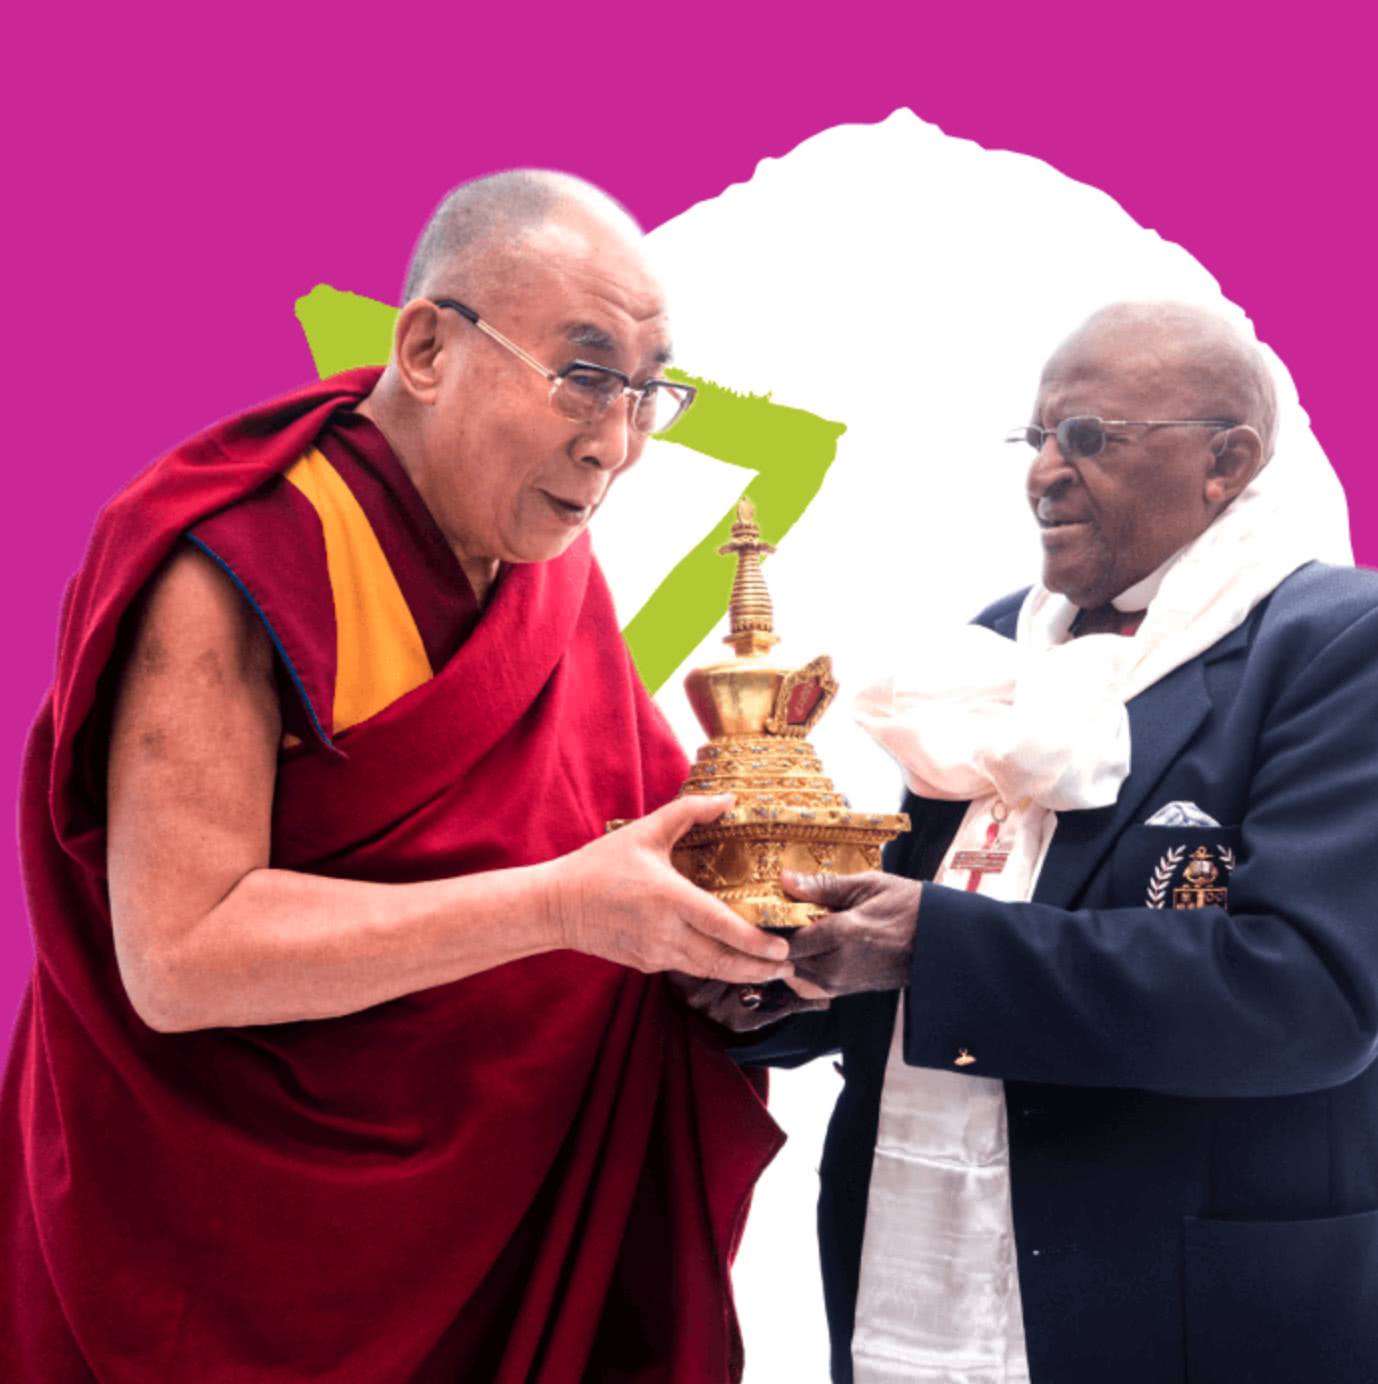 His Holiness the Dalai Lama and Archbishop Desmond Tutu